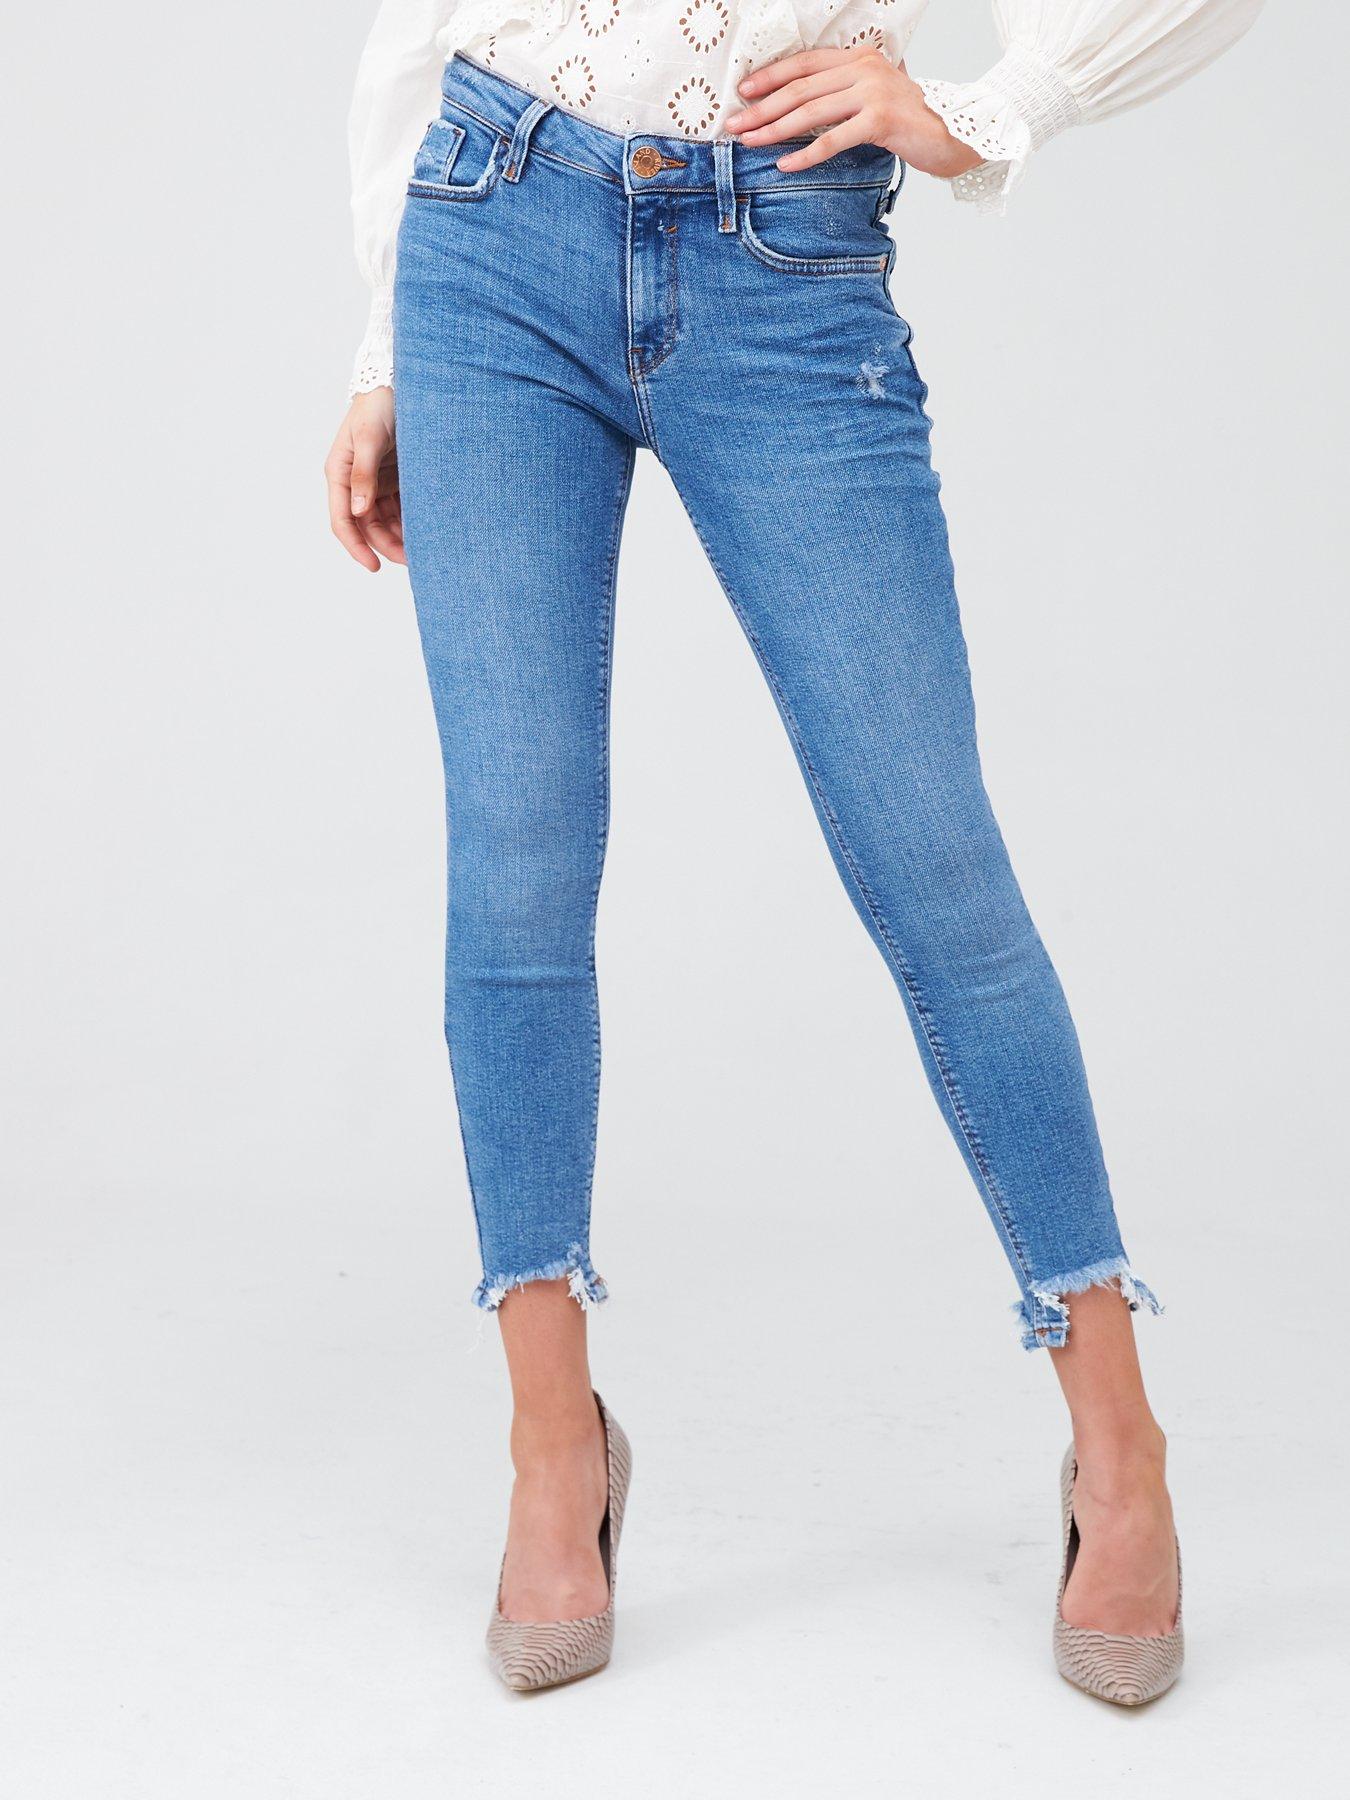 women's petite white skinny jeans